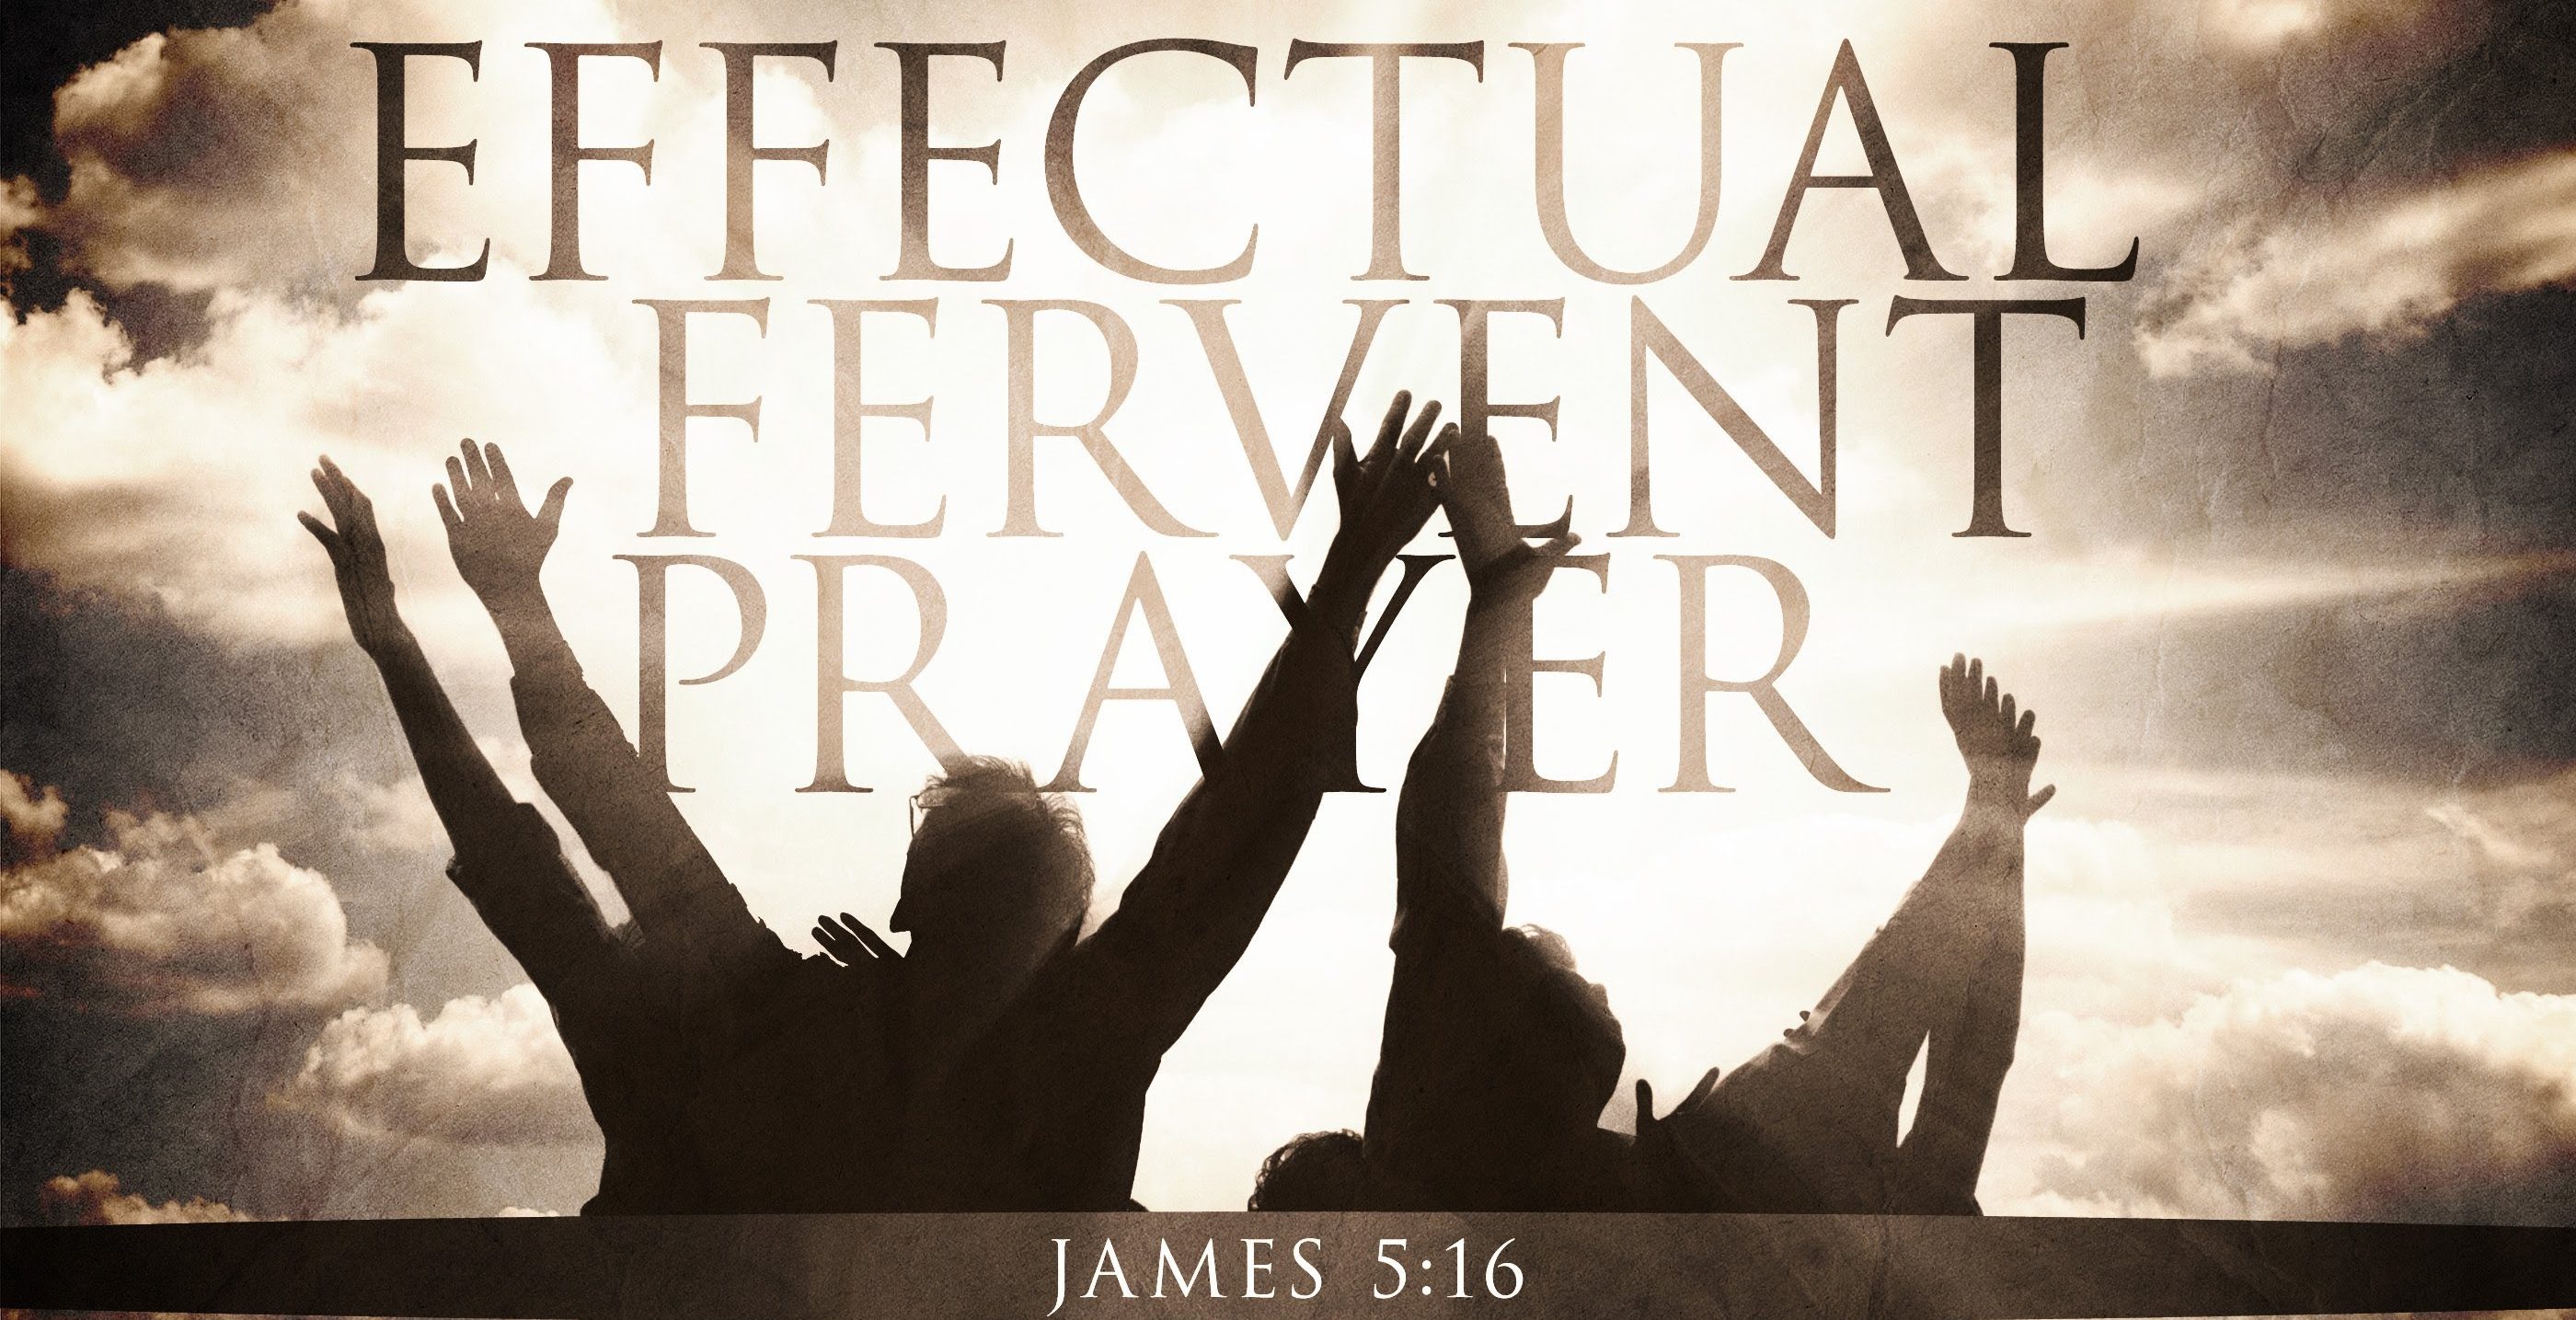 effectual fervent prayers